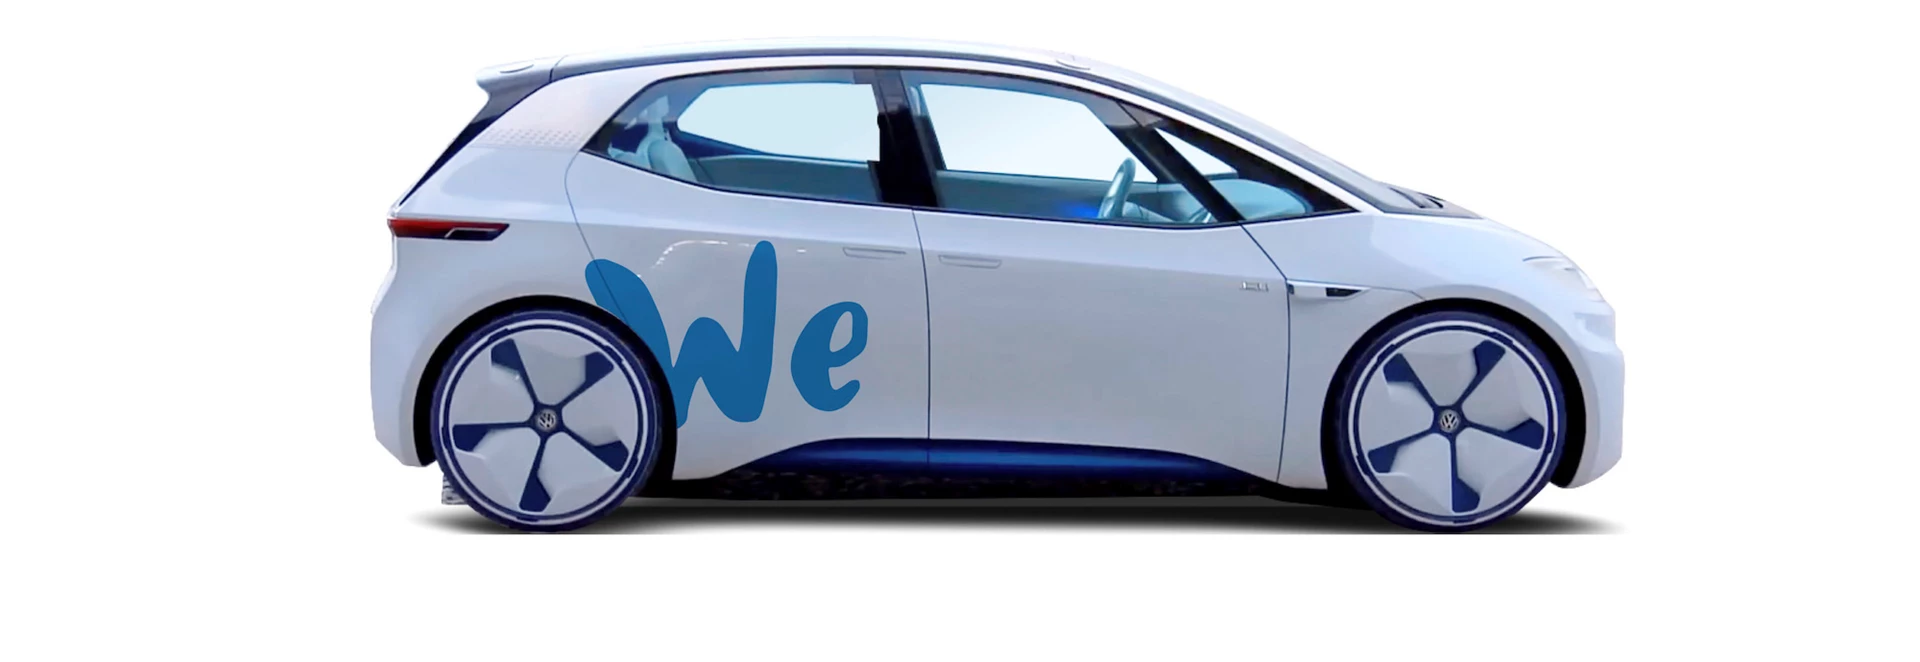 Volkswagen to offer zero-emission car-share service in 2020 